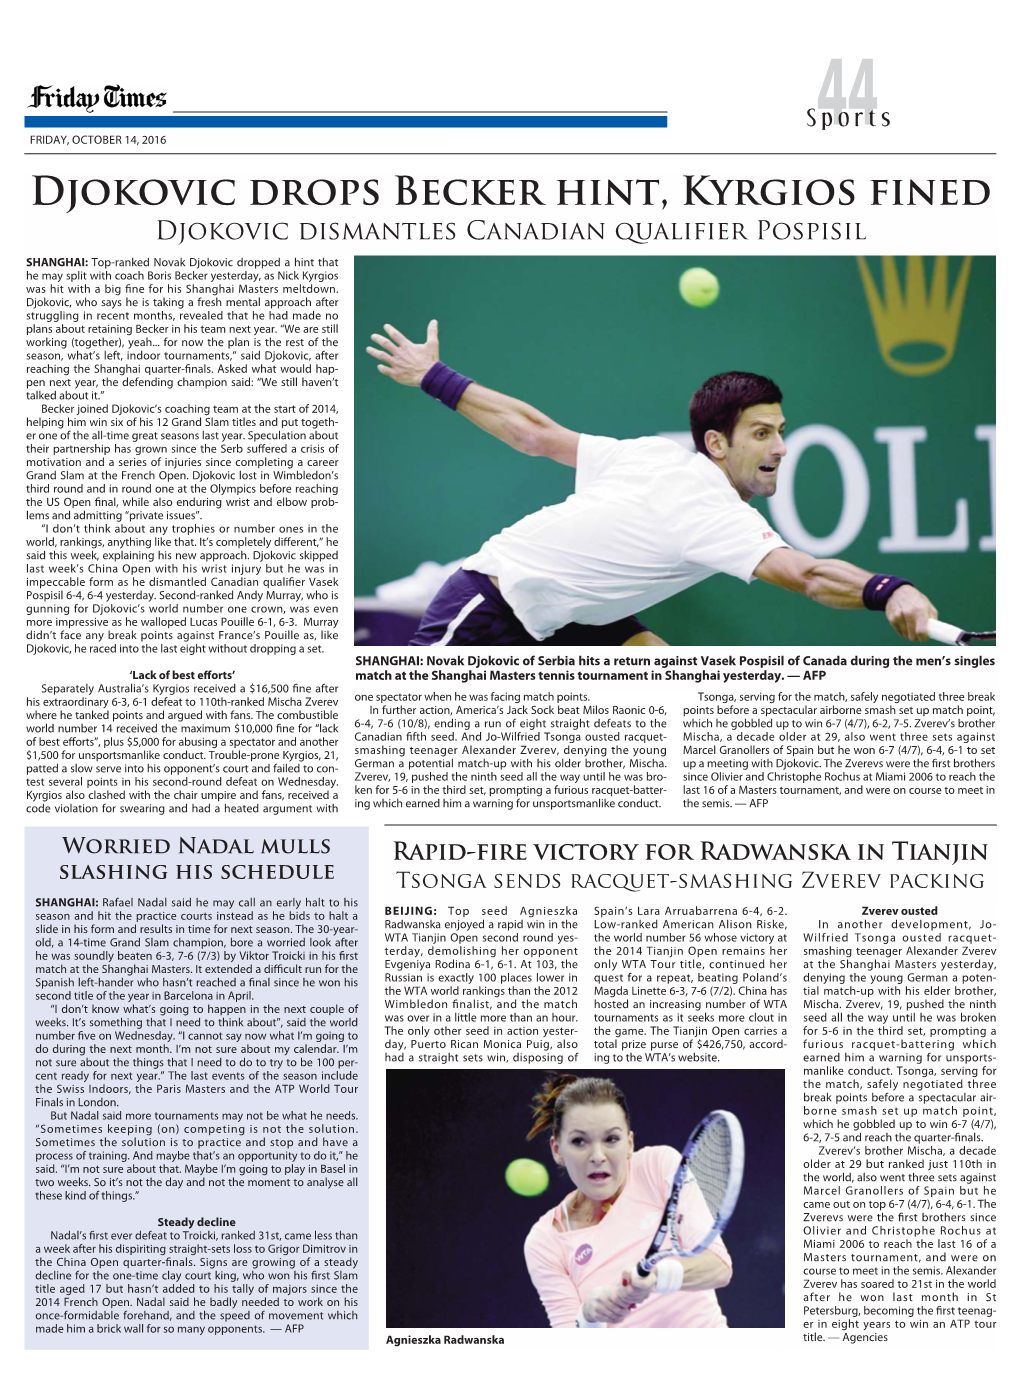 Djokovic Drops Becker Hint, Kyrgios Fined Djokovic Dismantles Canadian Qualifier Pospisil